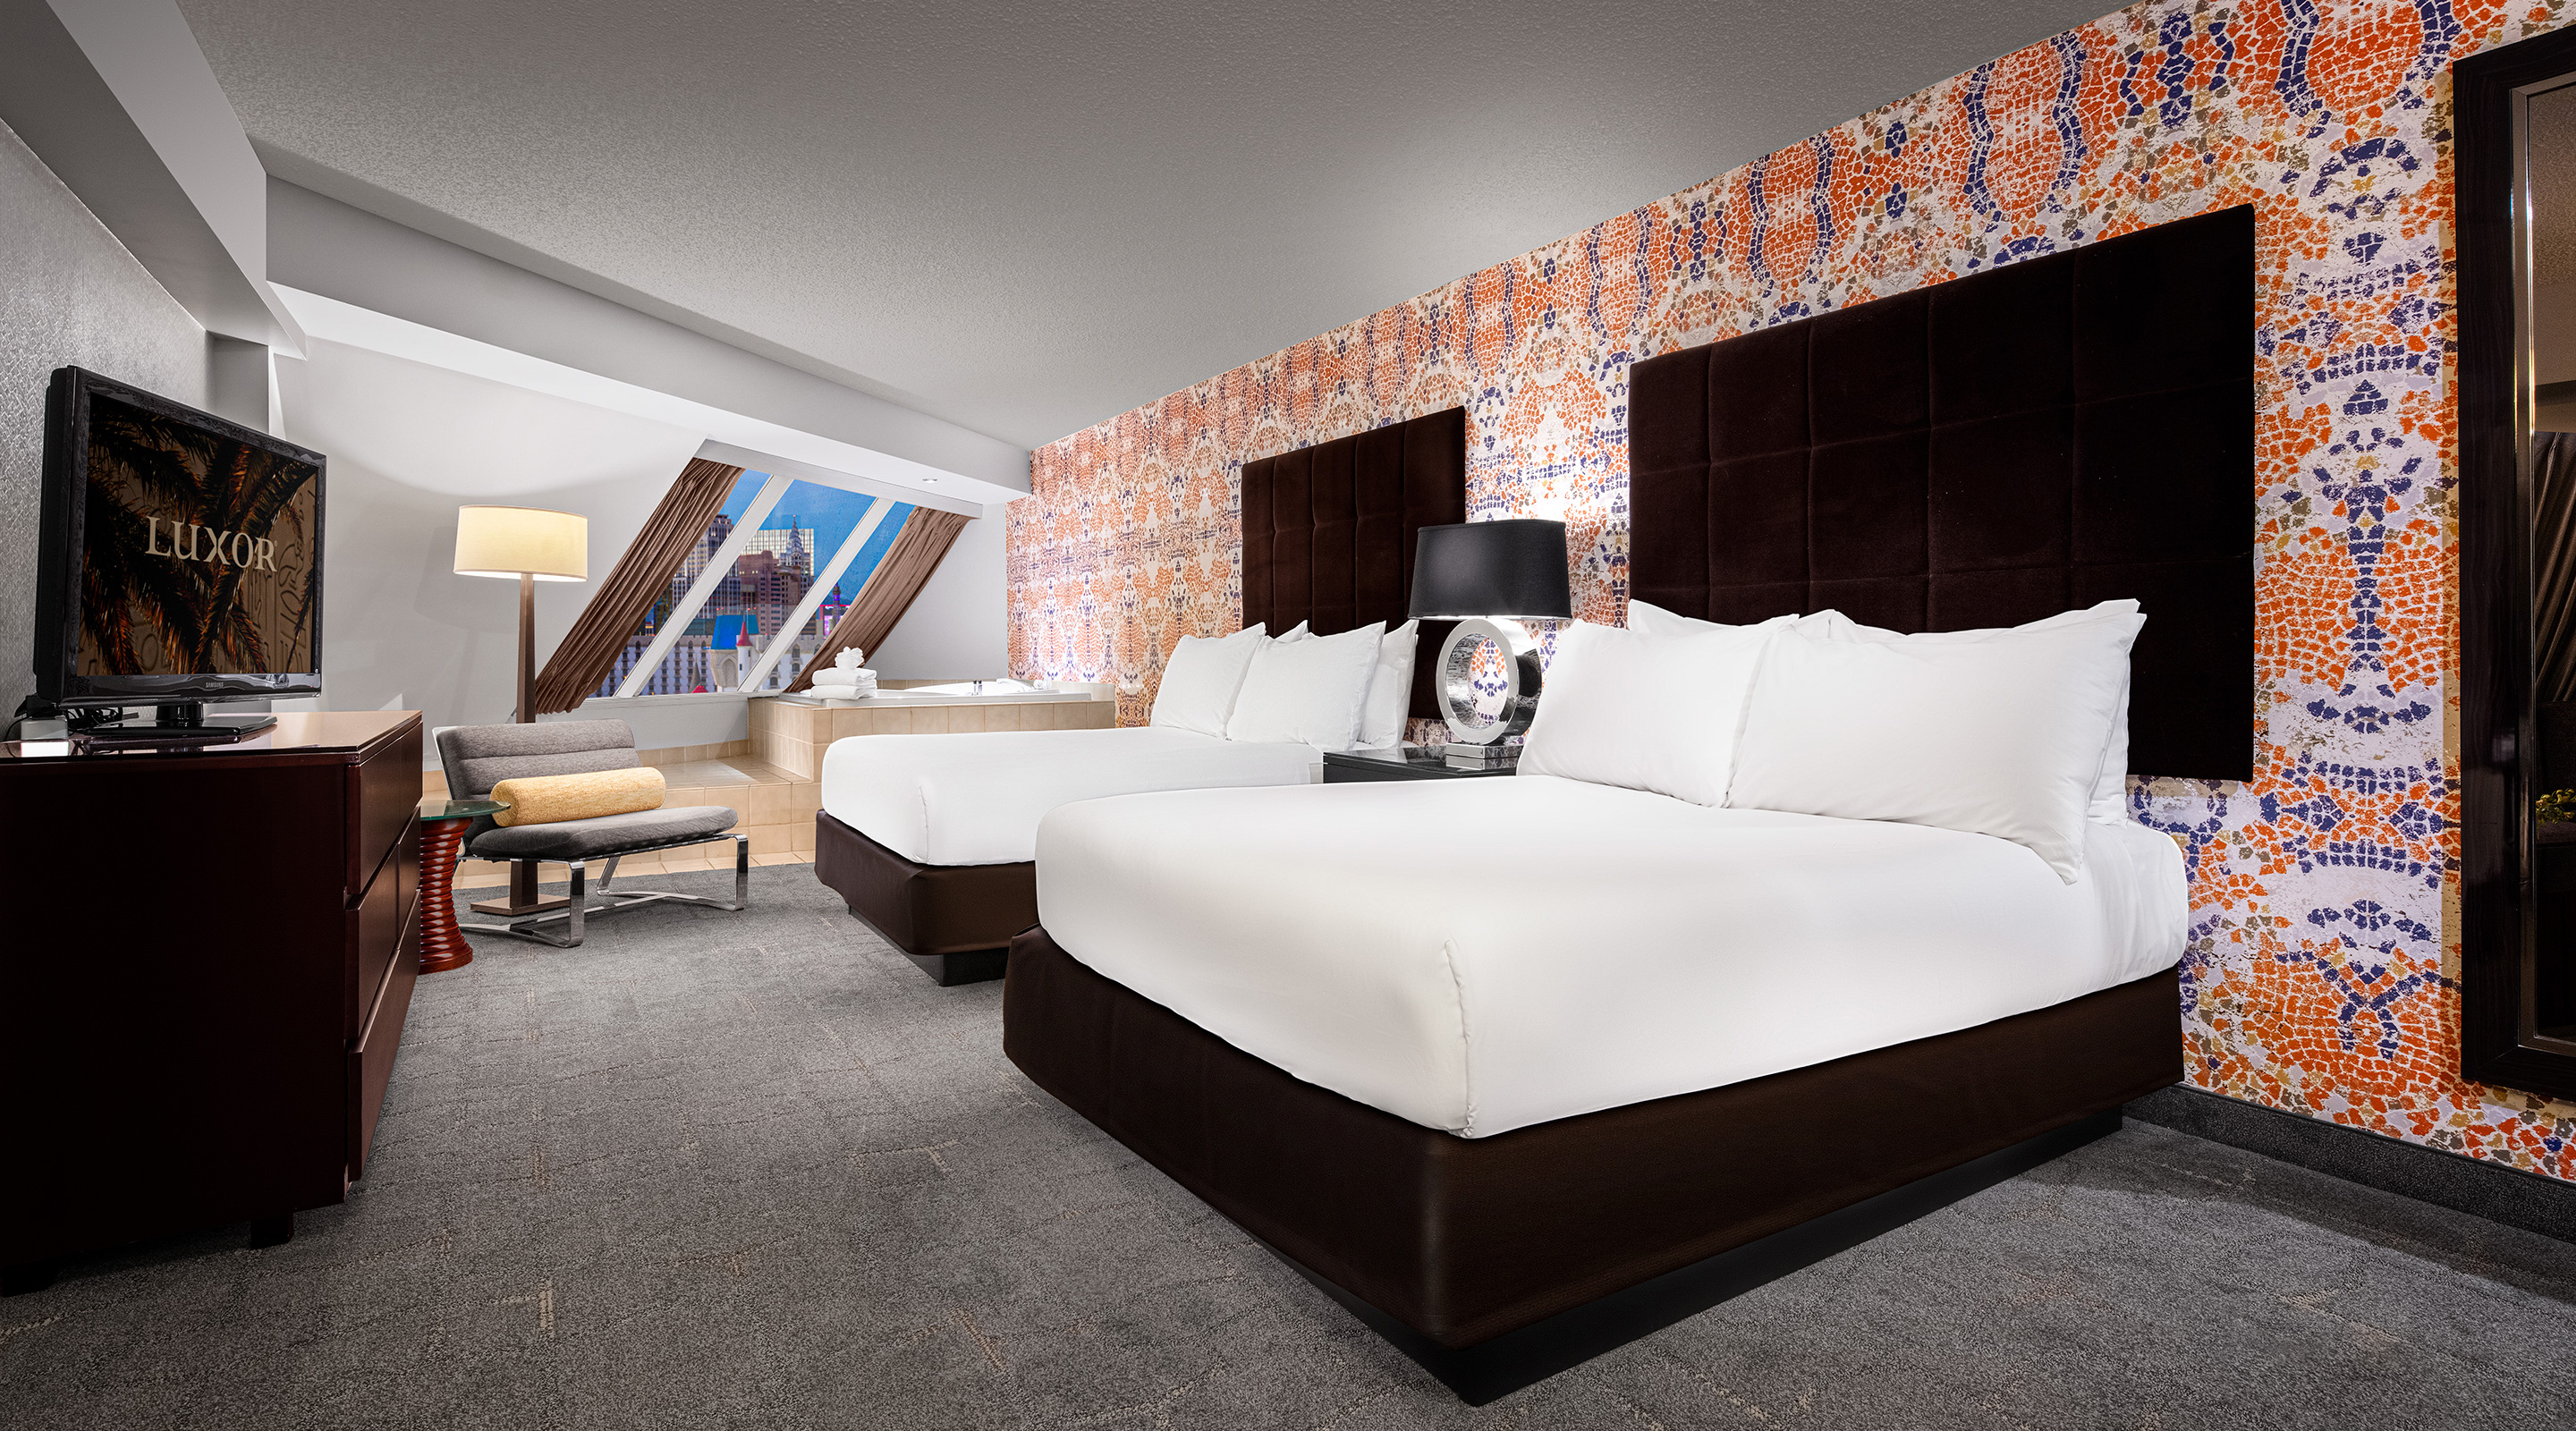 luxor-hotel-pyramid-queen-bedroom